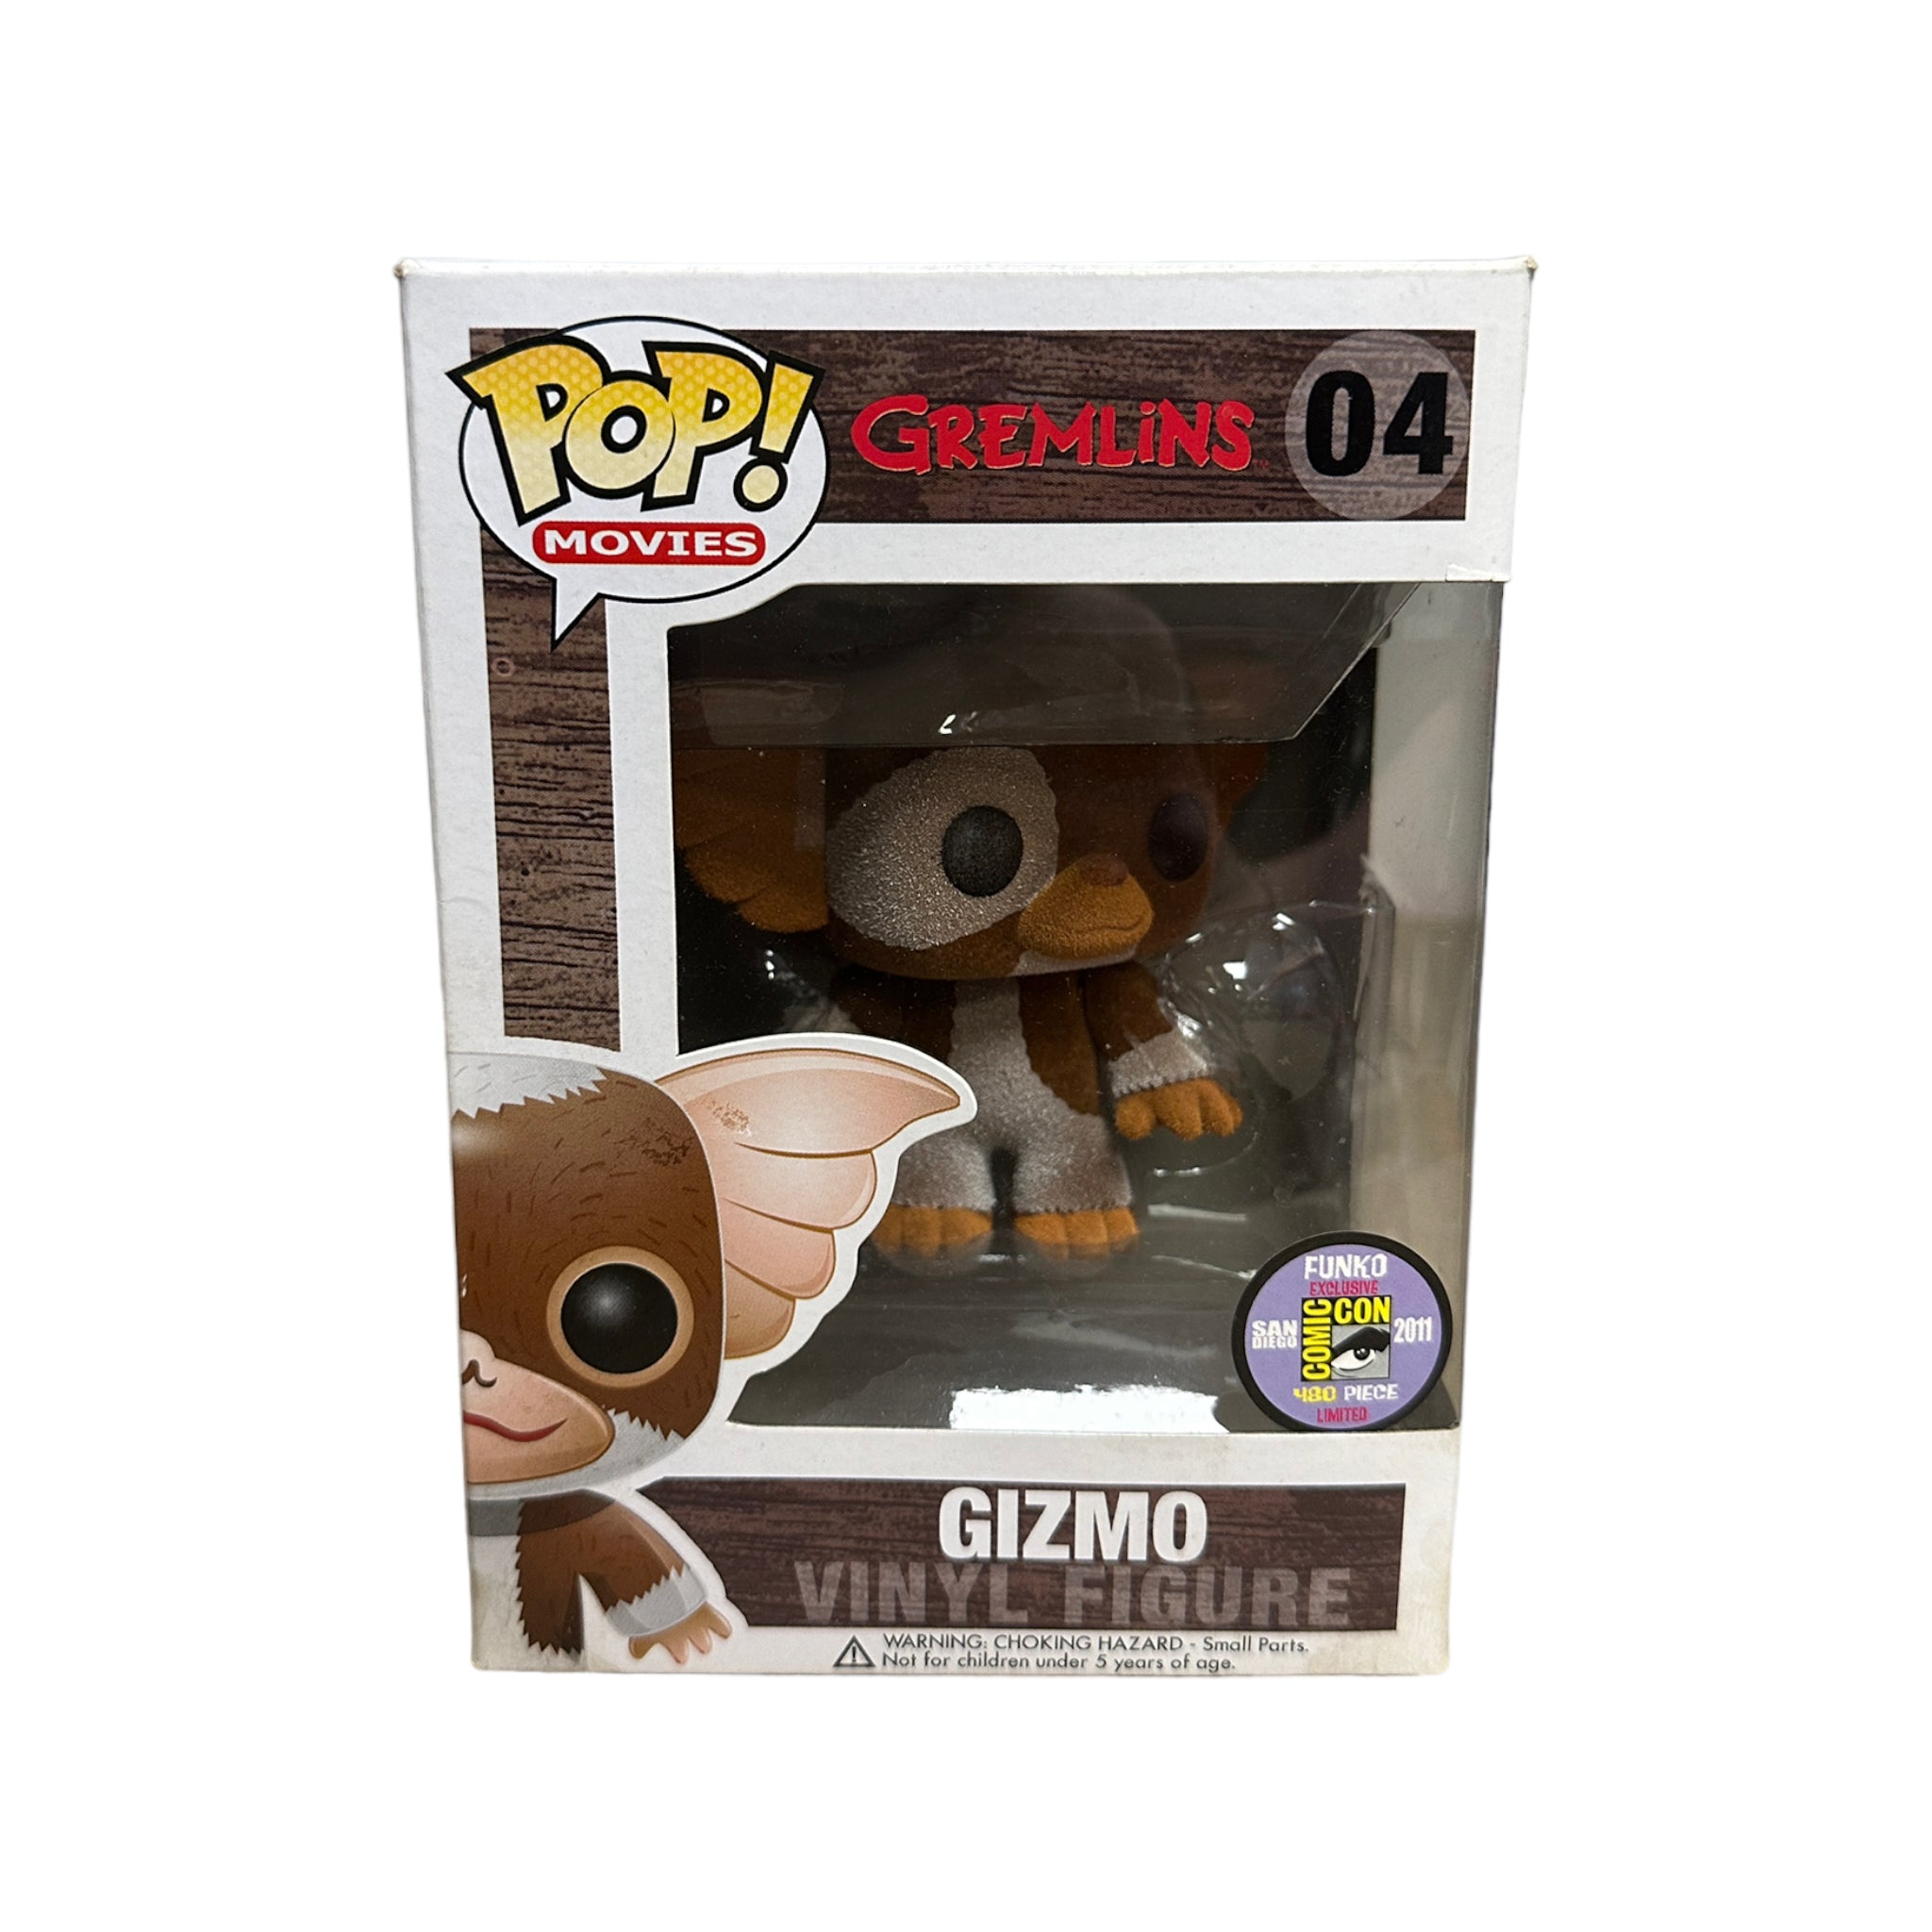 Gizmo #04 (Flocked) Funko Pop! - Gremlins - SDCC 2011 Exclusive LE480 Pcs - Condition 6/10